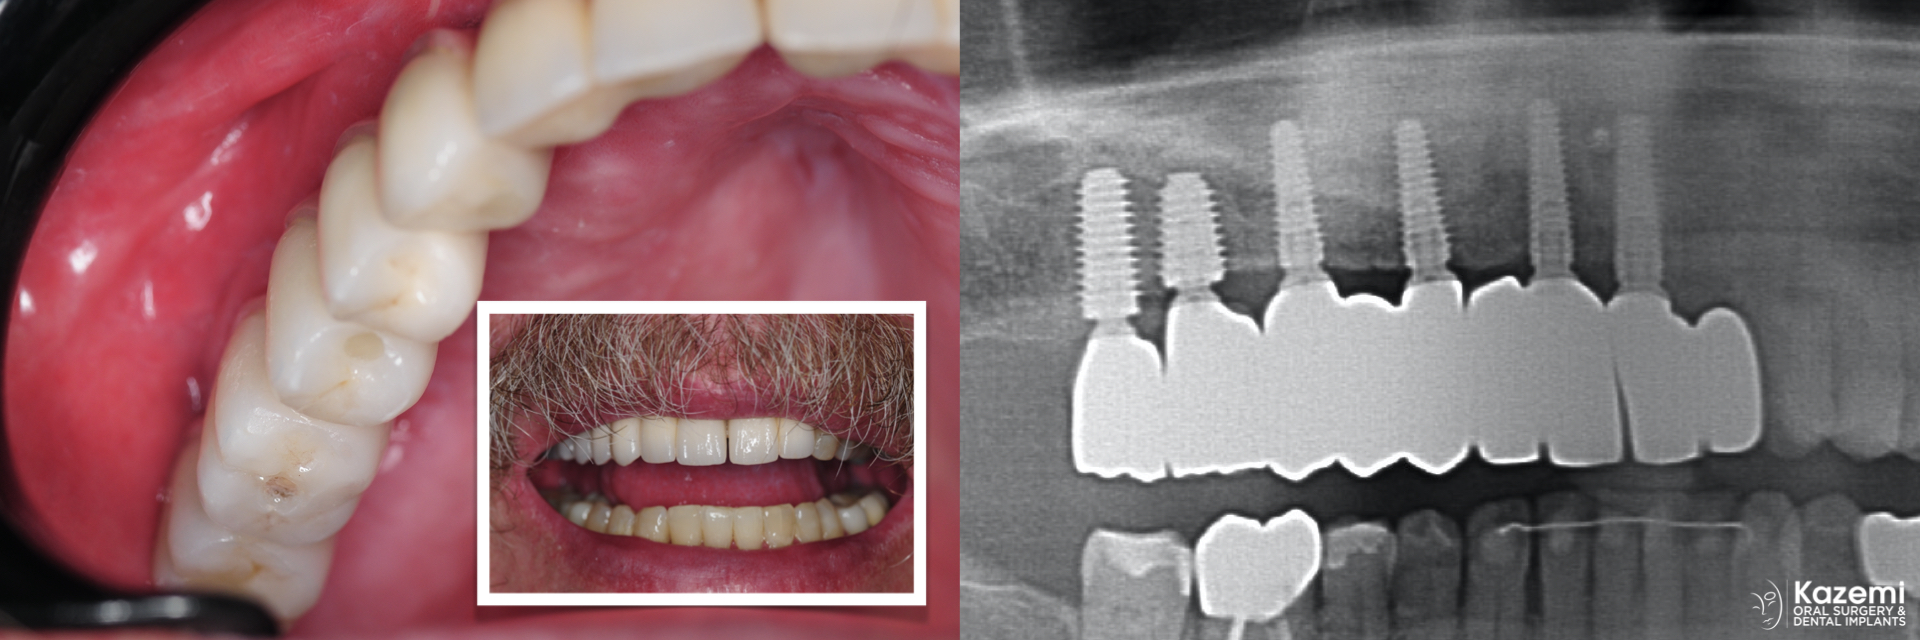 4.-maxillary-3-d-deficiency-osteogenesis-distraction-onlay-bone-graft-dental-implants-kazemi-oral-surgery